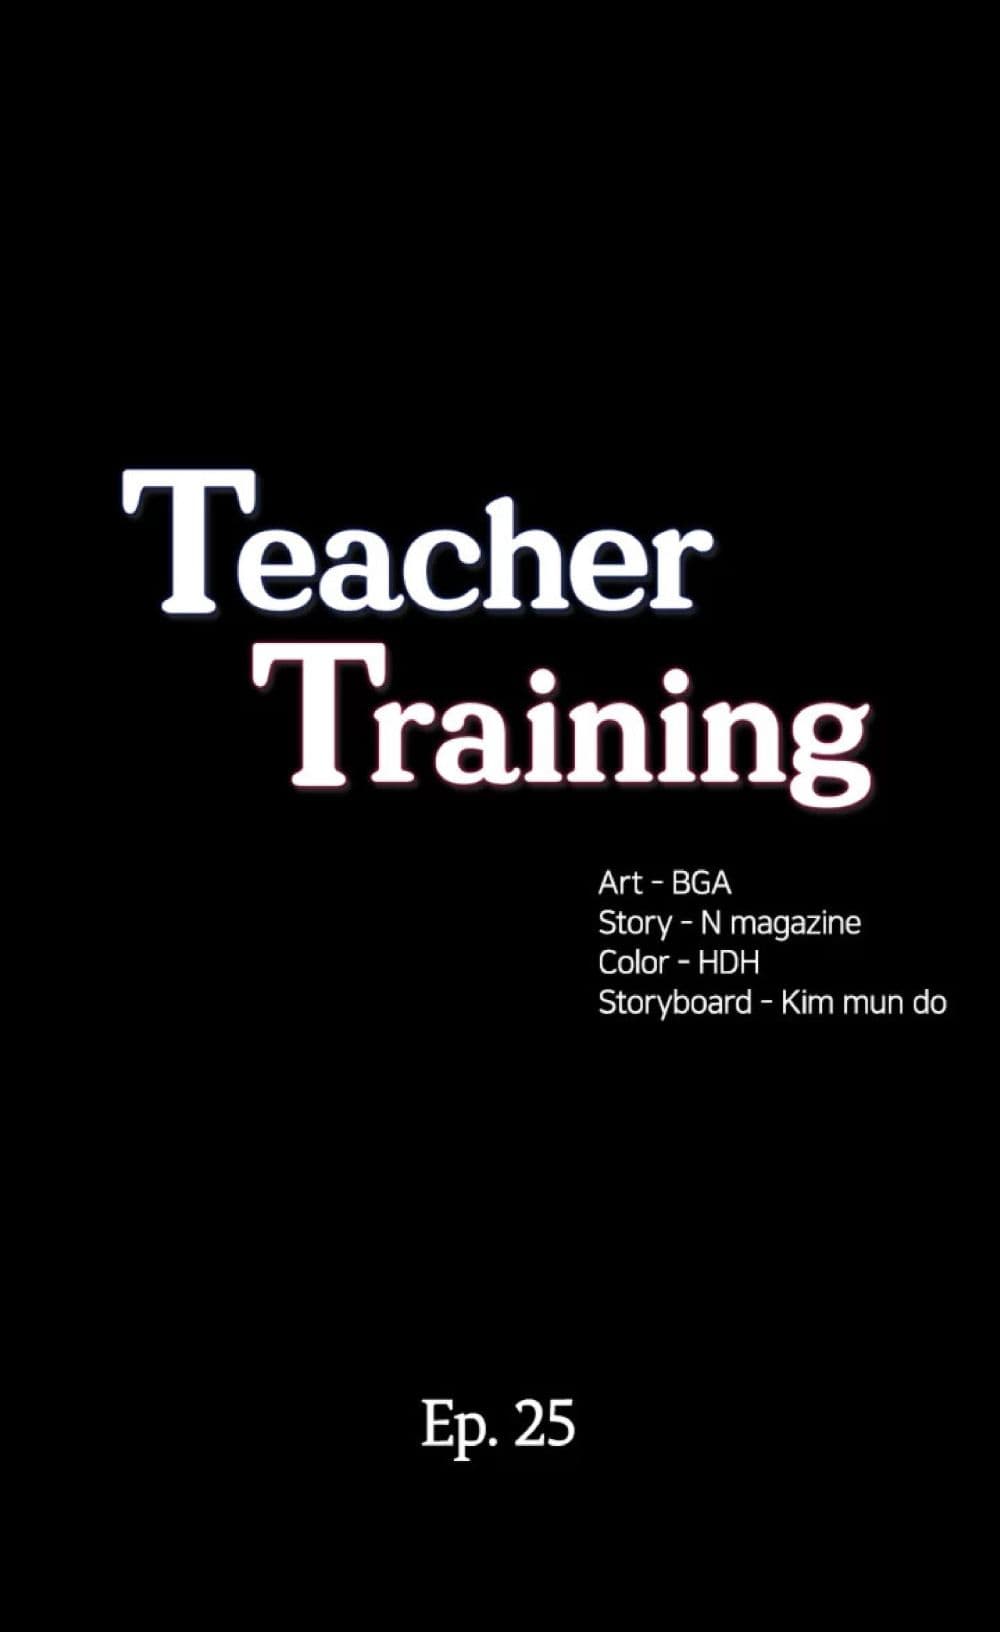 Teaching Practice03